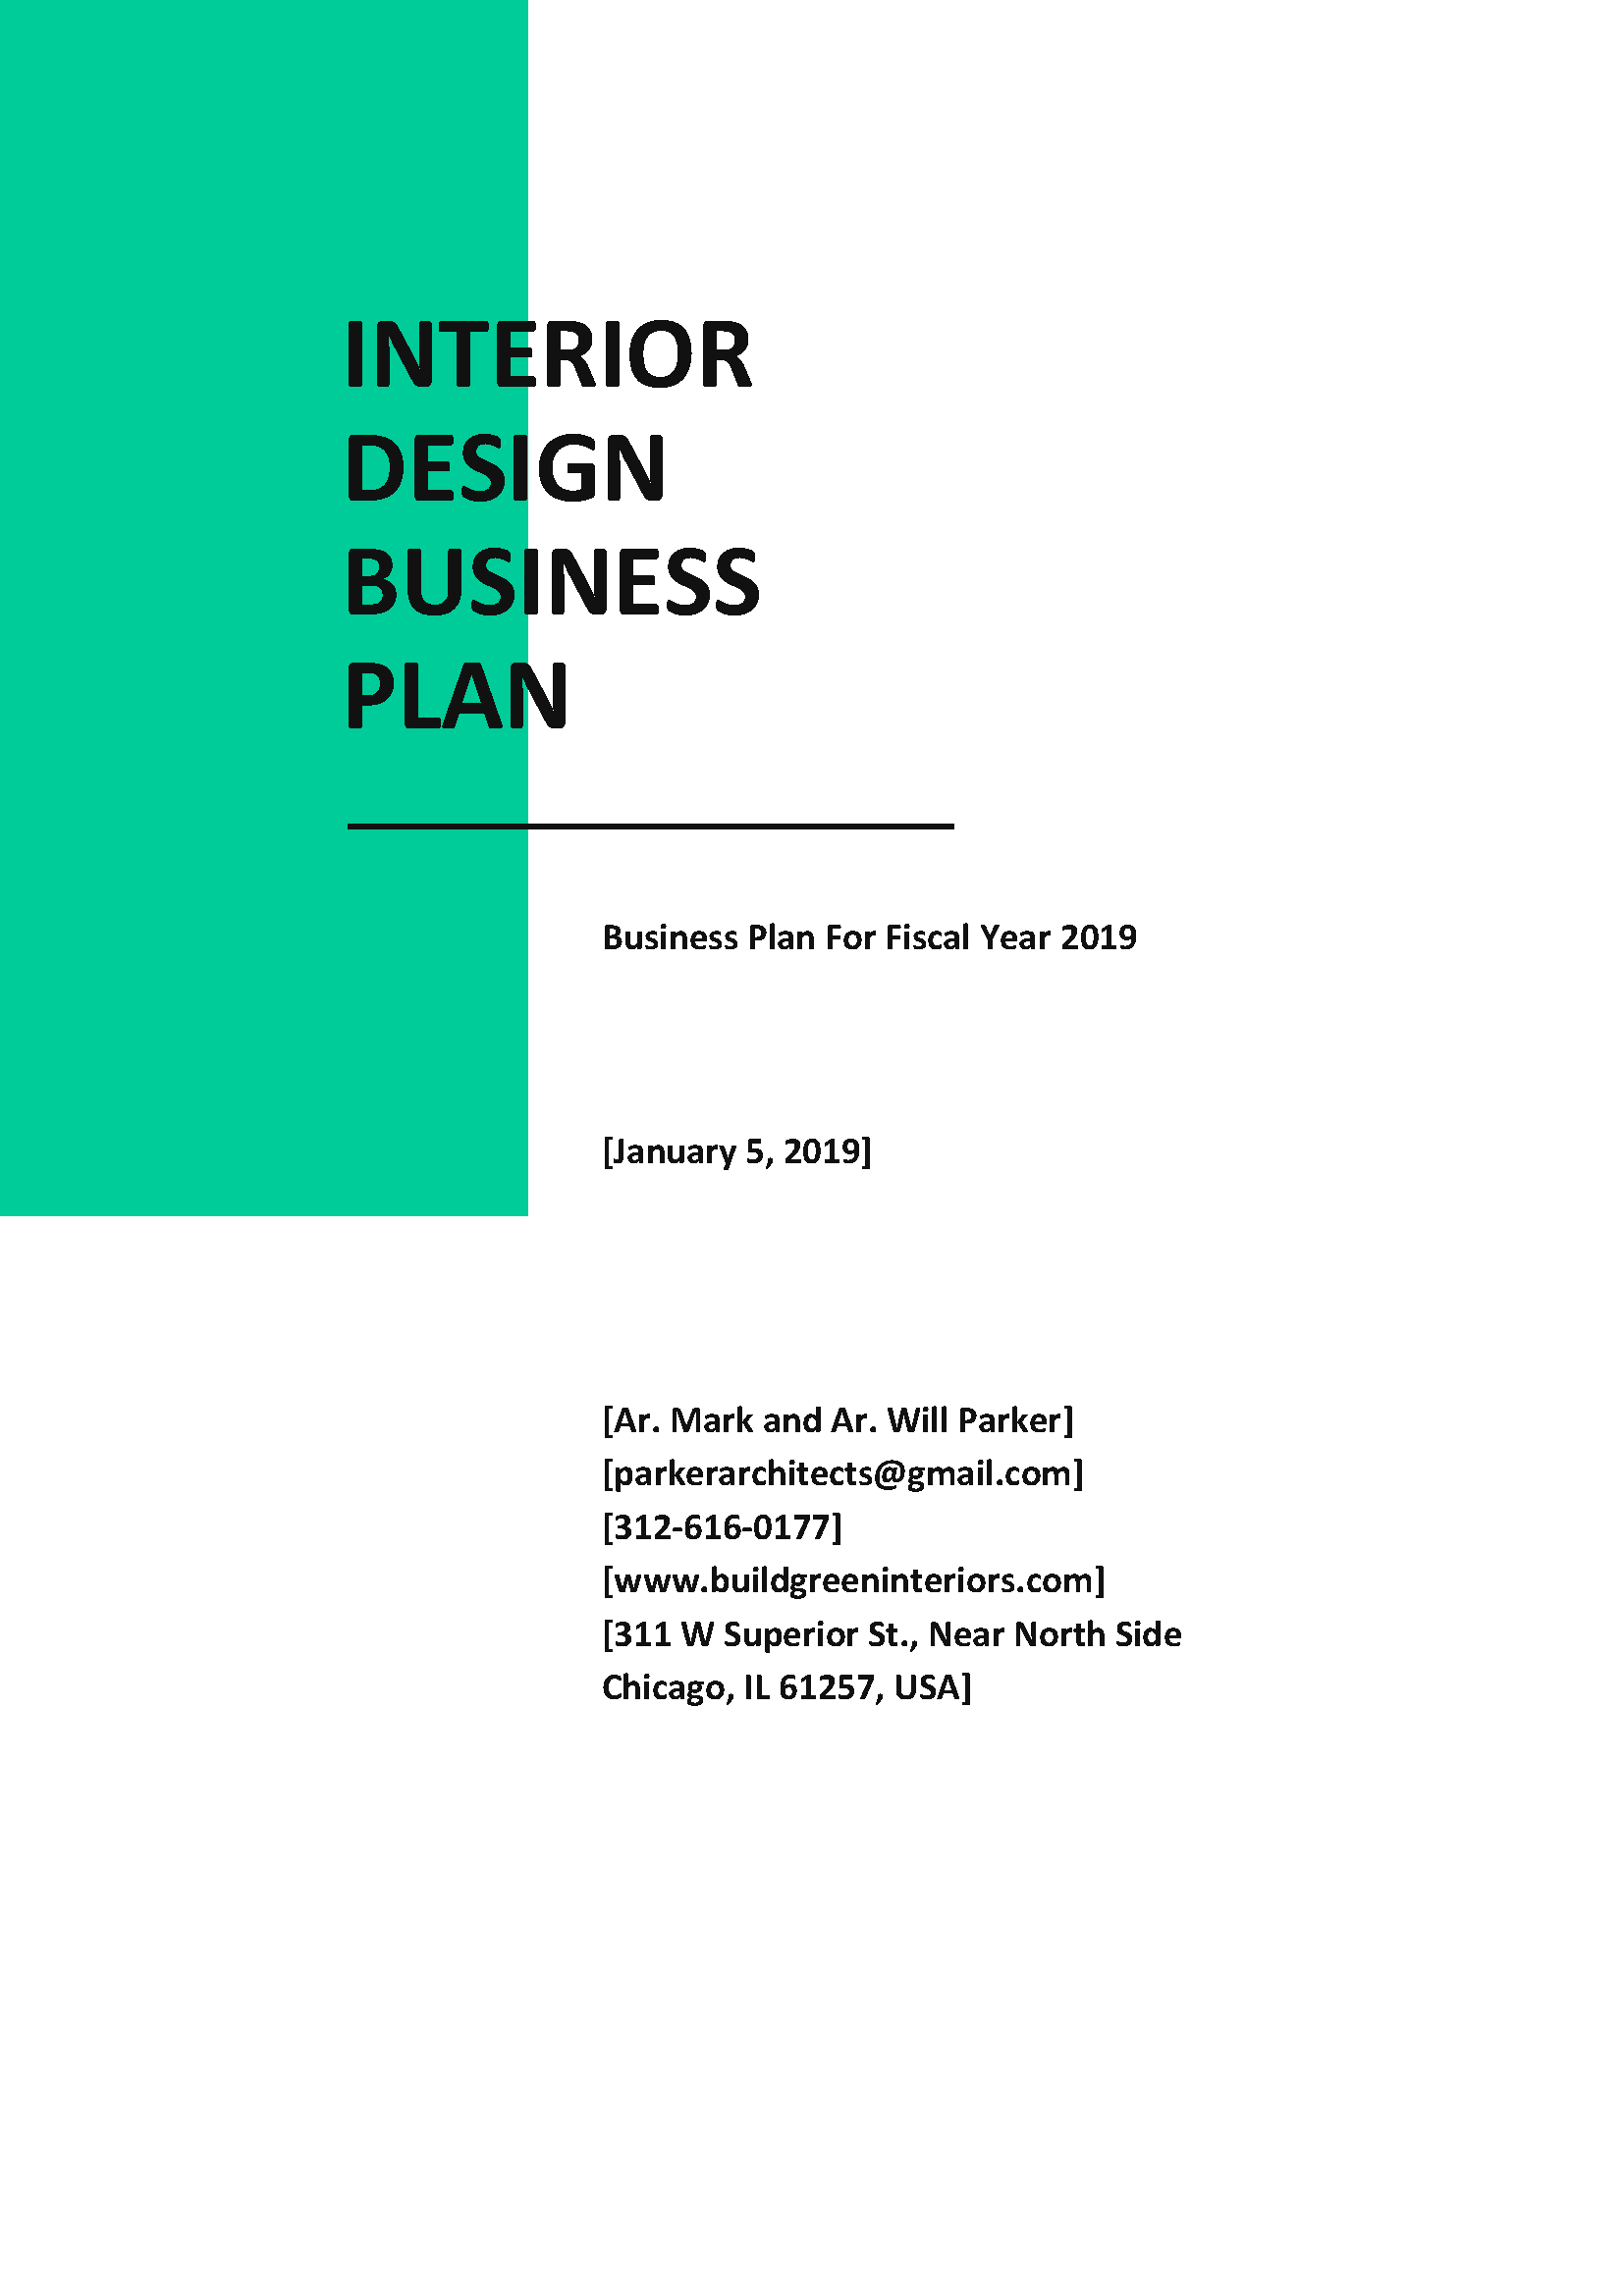 5 - Interior Design Business Plan